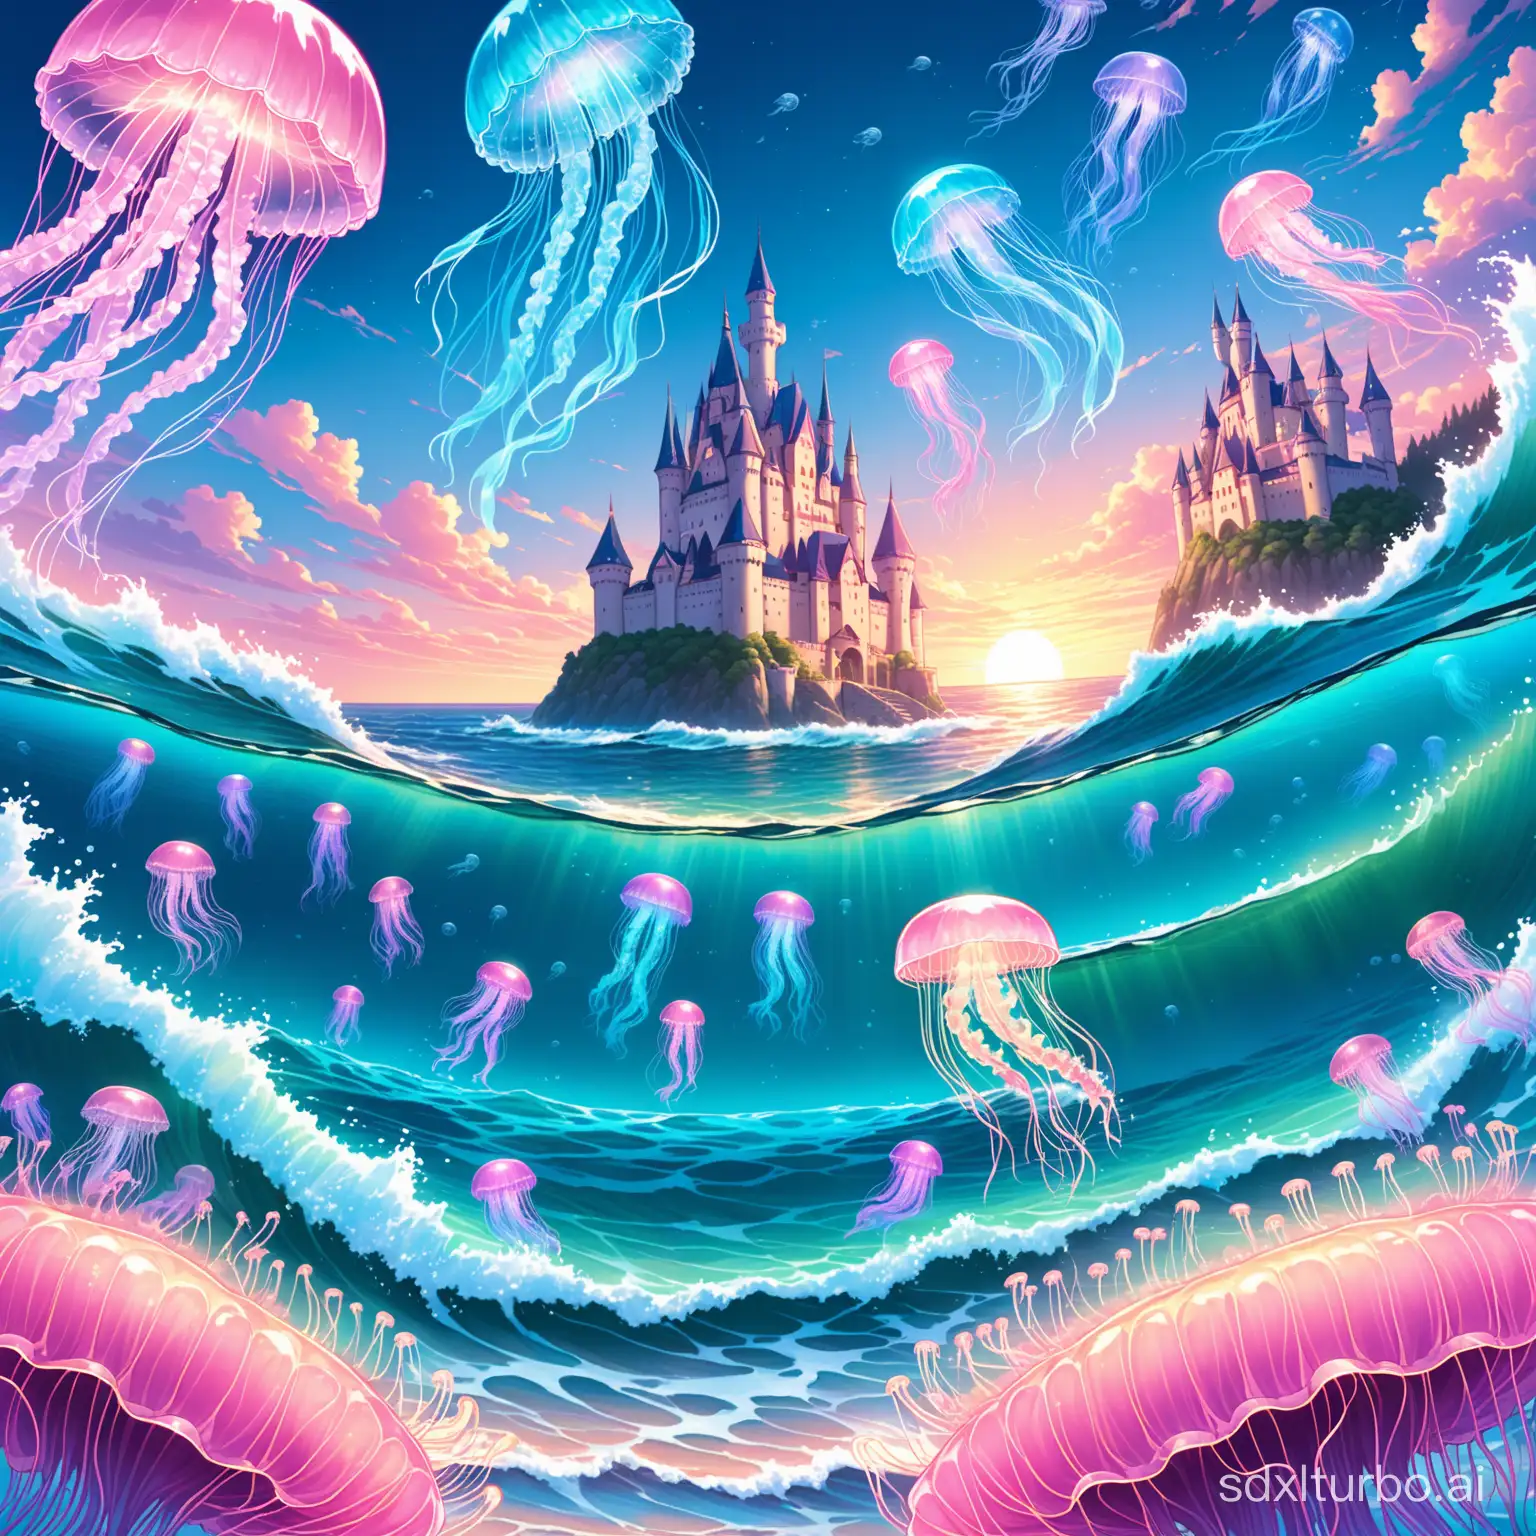 Ocean, (blue, waves) (jellyfish, pink), castle